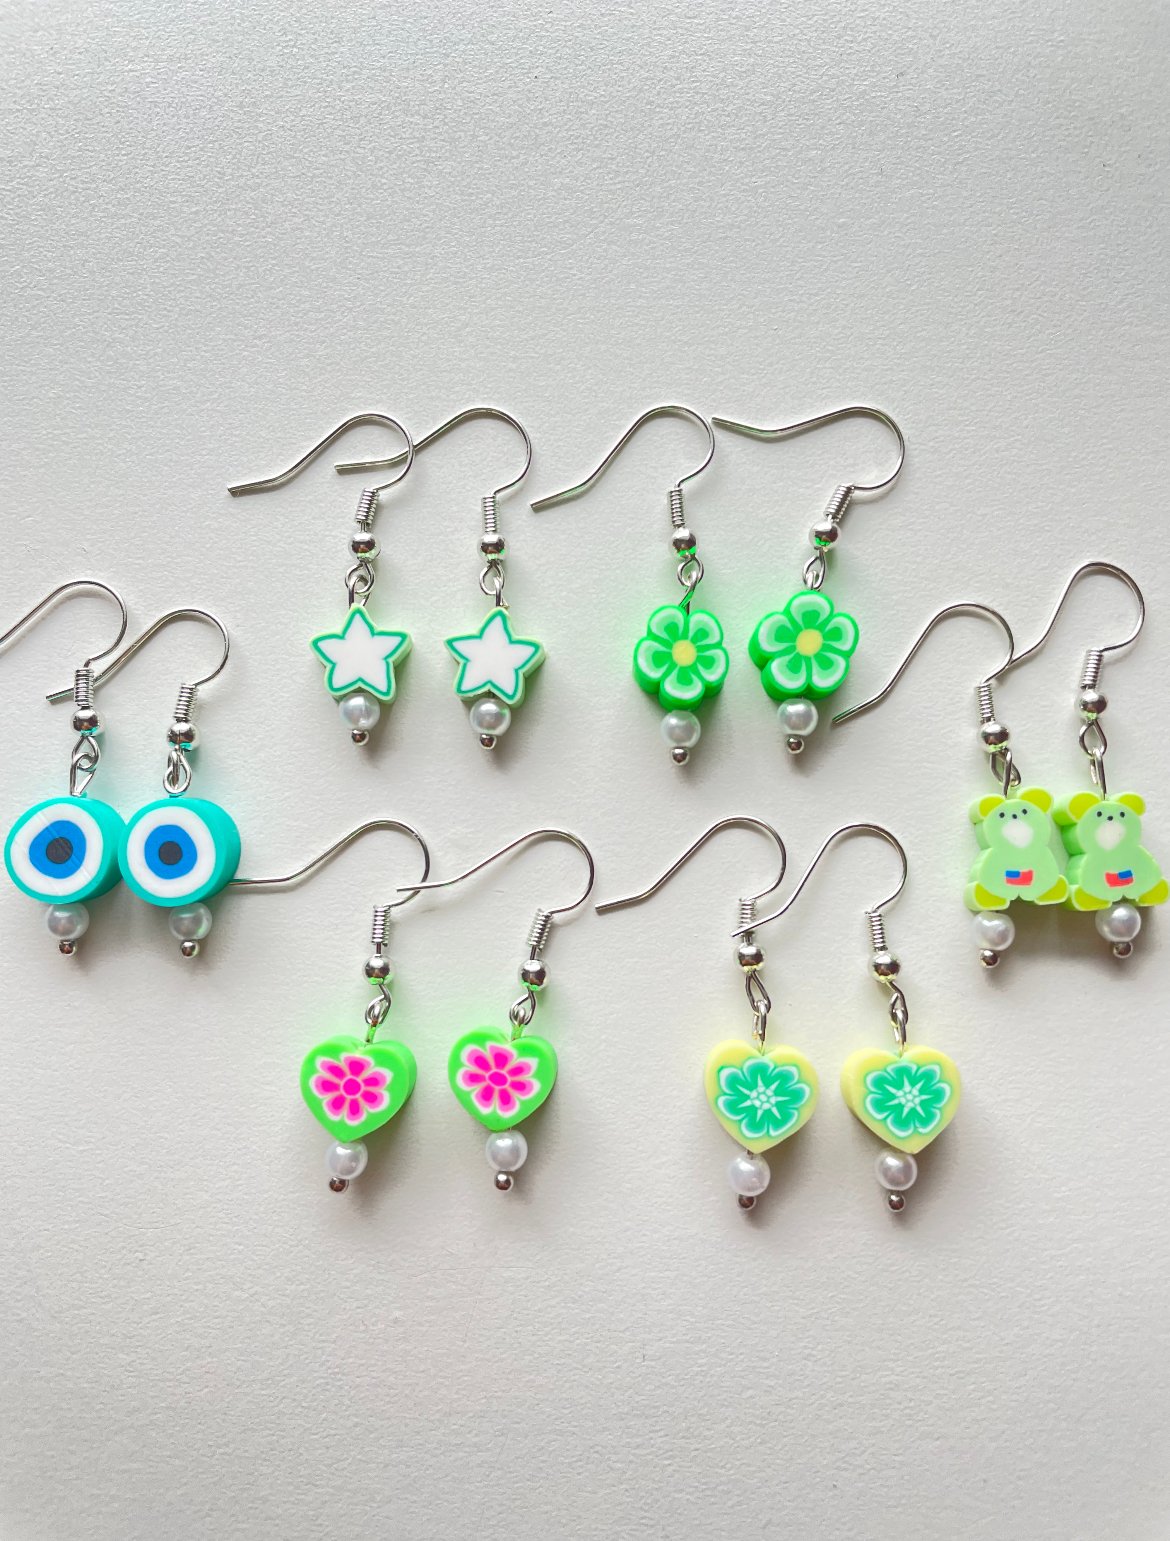 Image of charm earrings